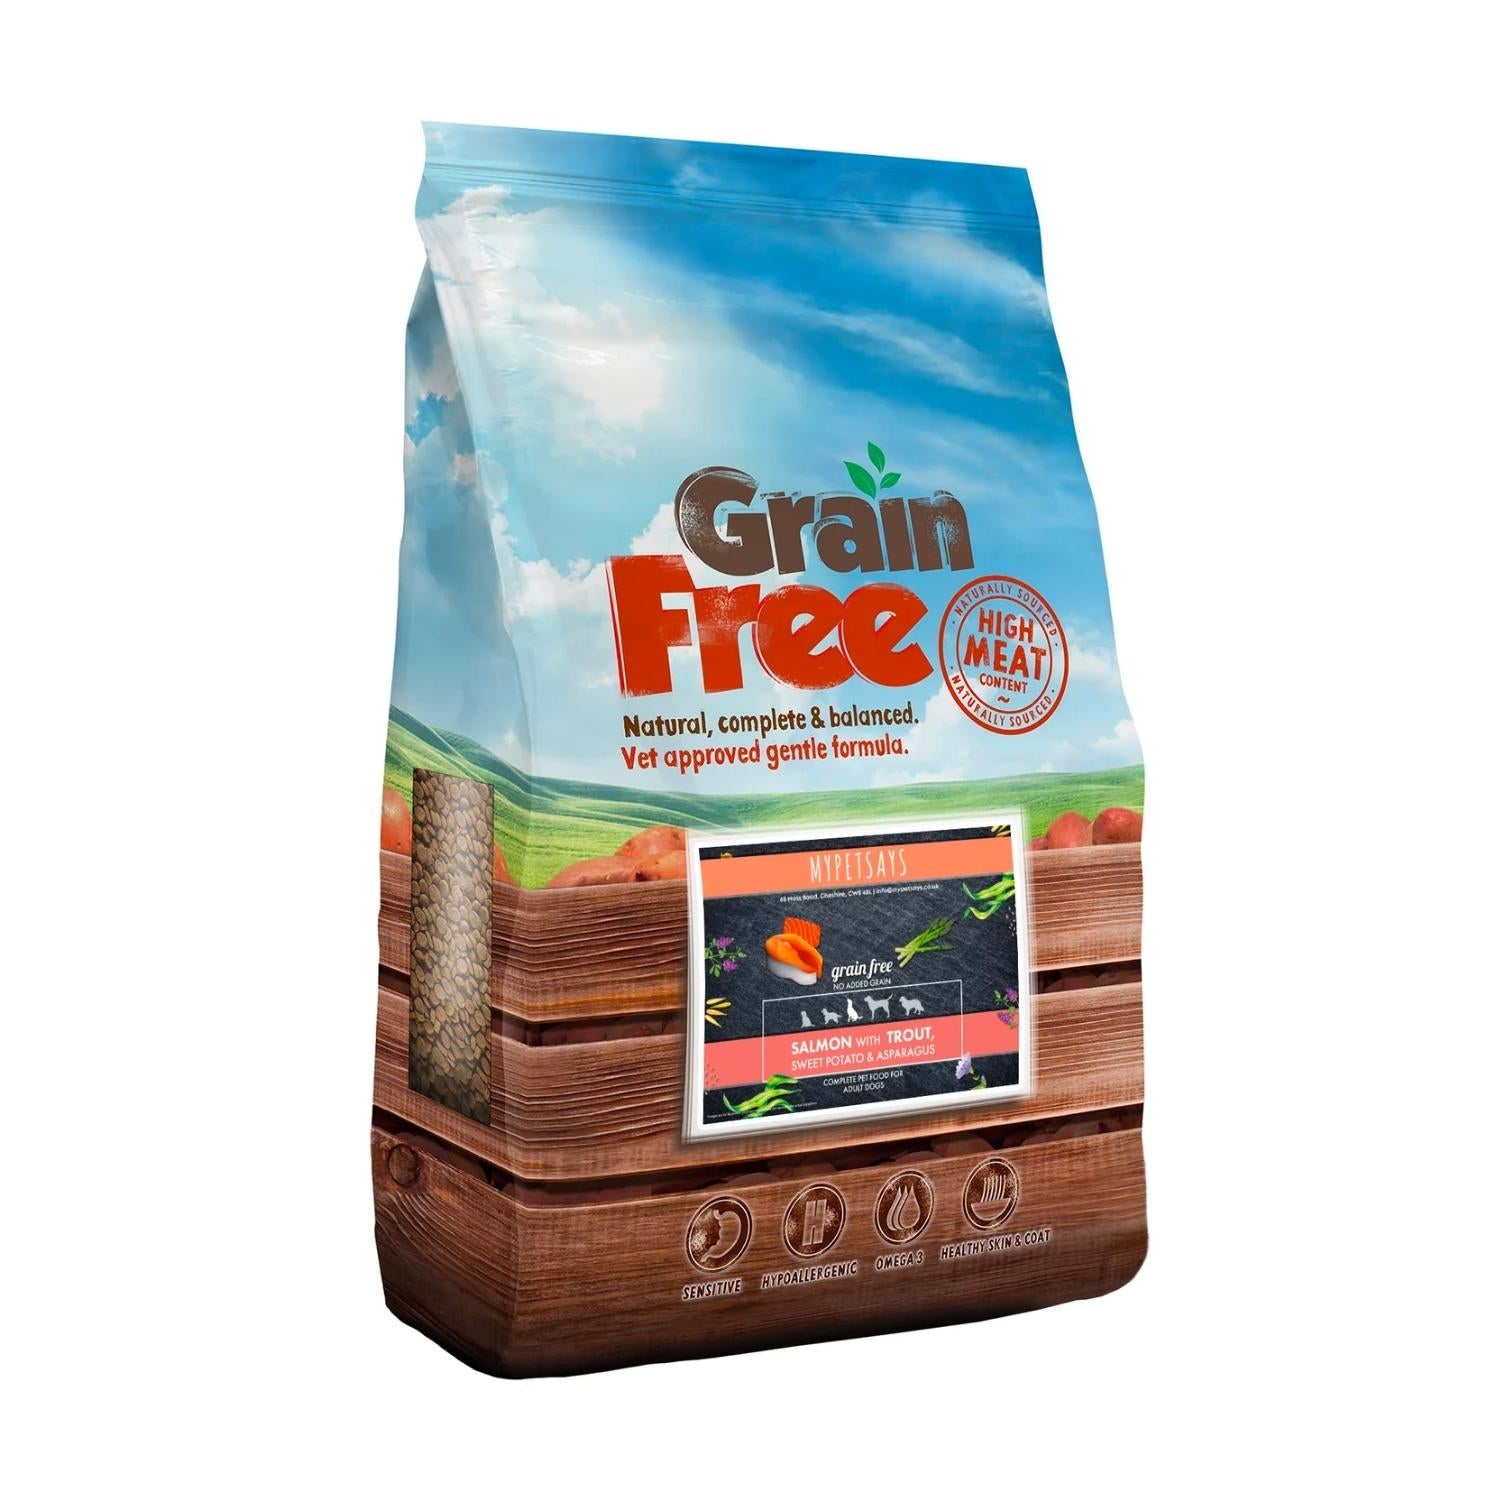 Grain Free Dog Food - Salmon, Trout, Sweet Potato & Asparagus